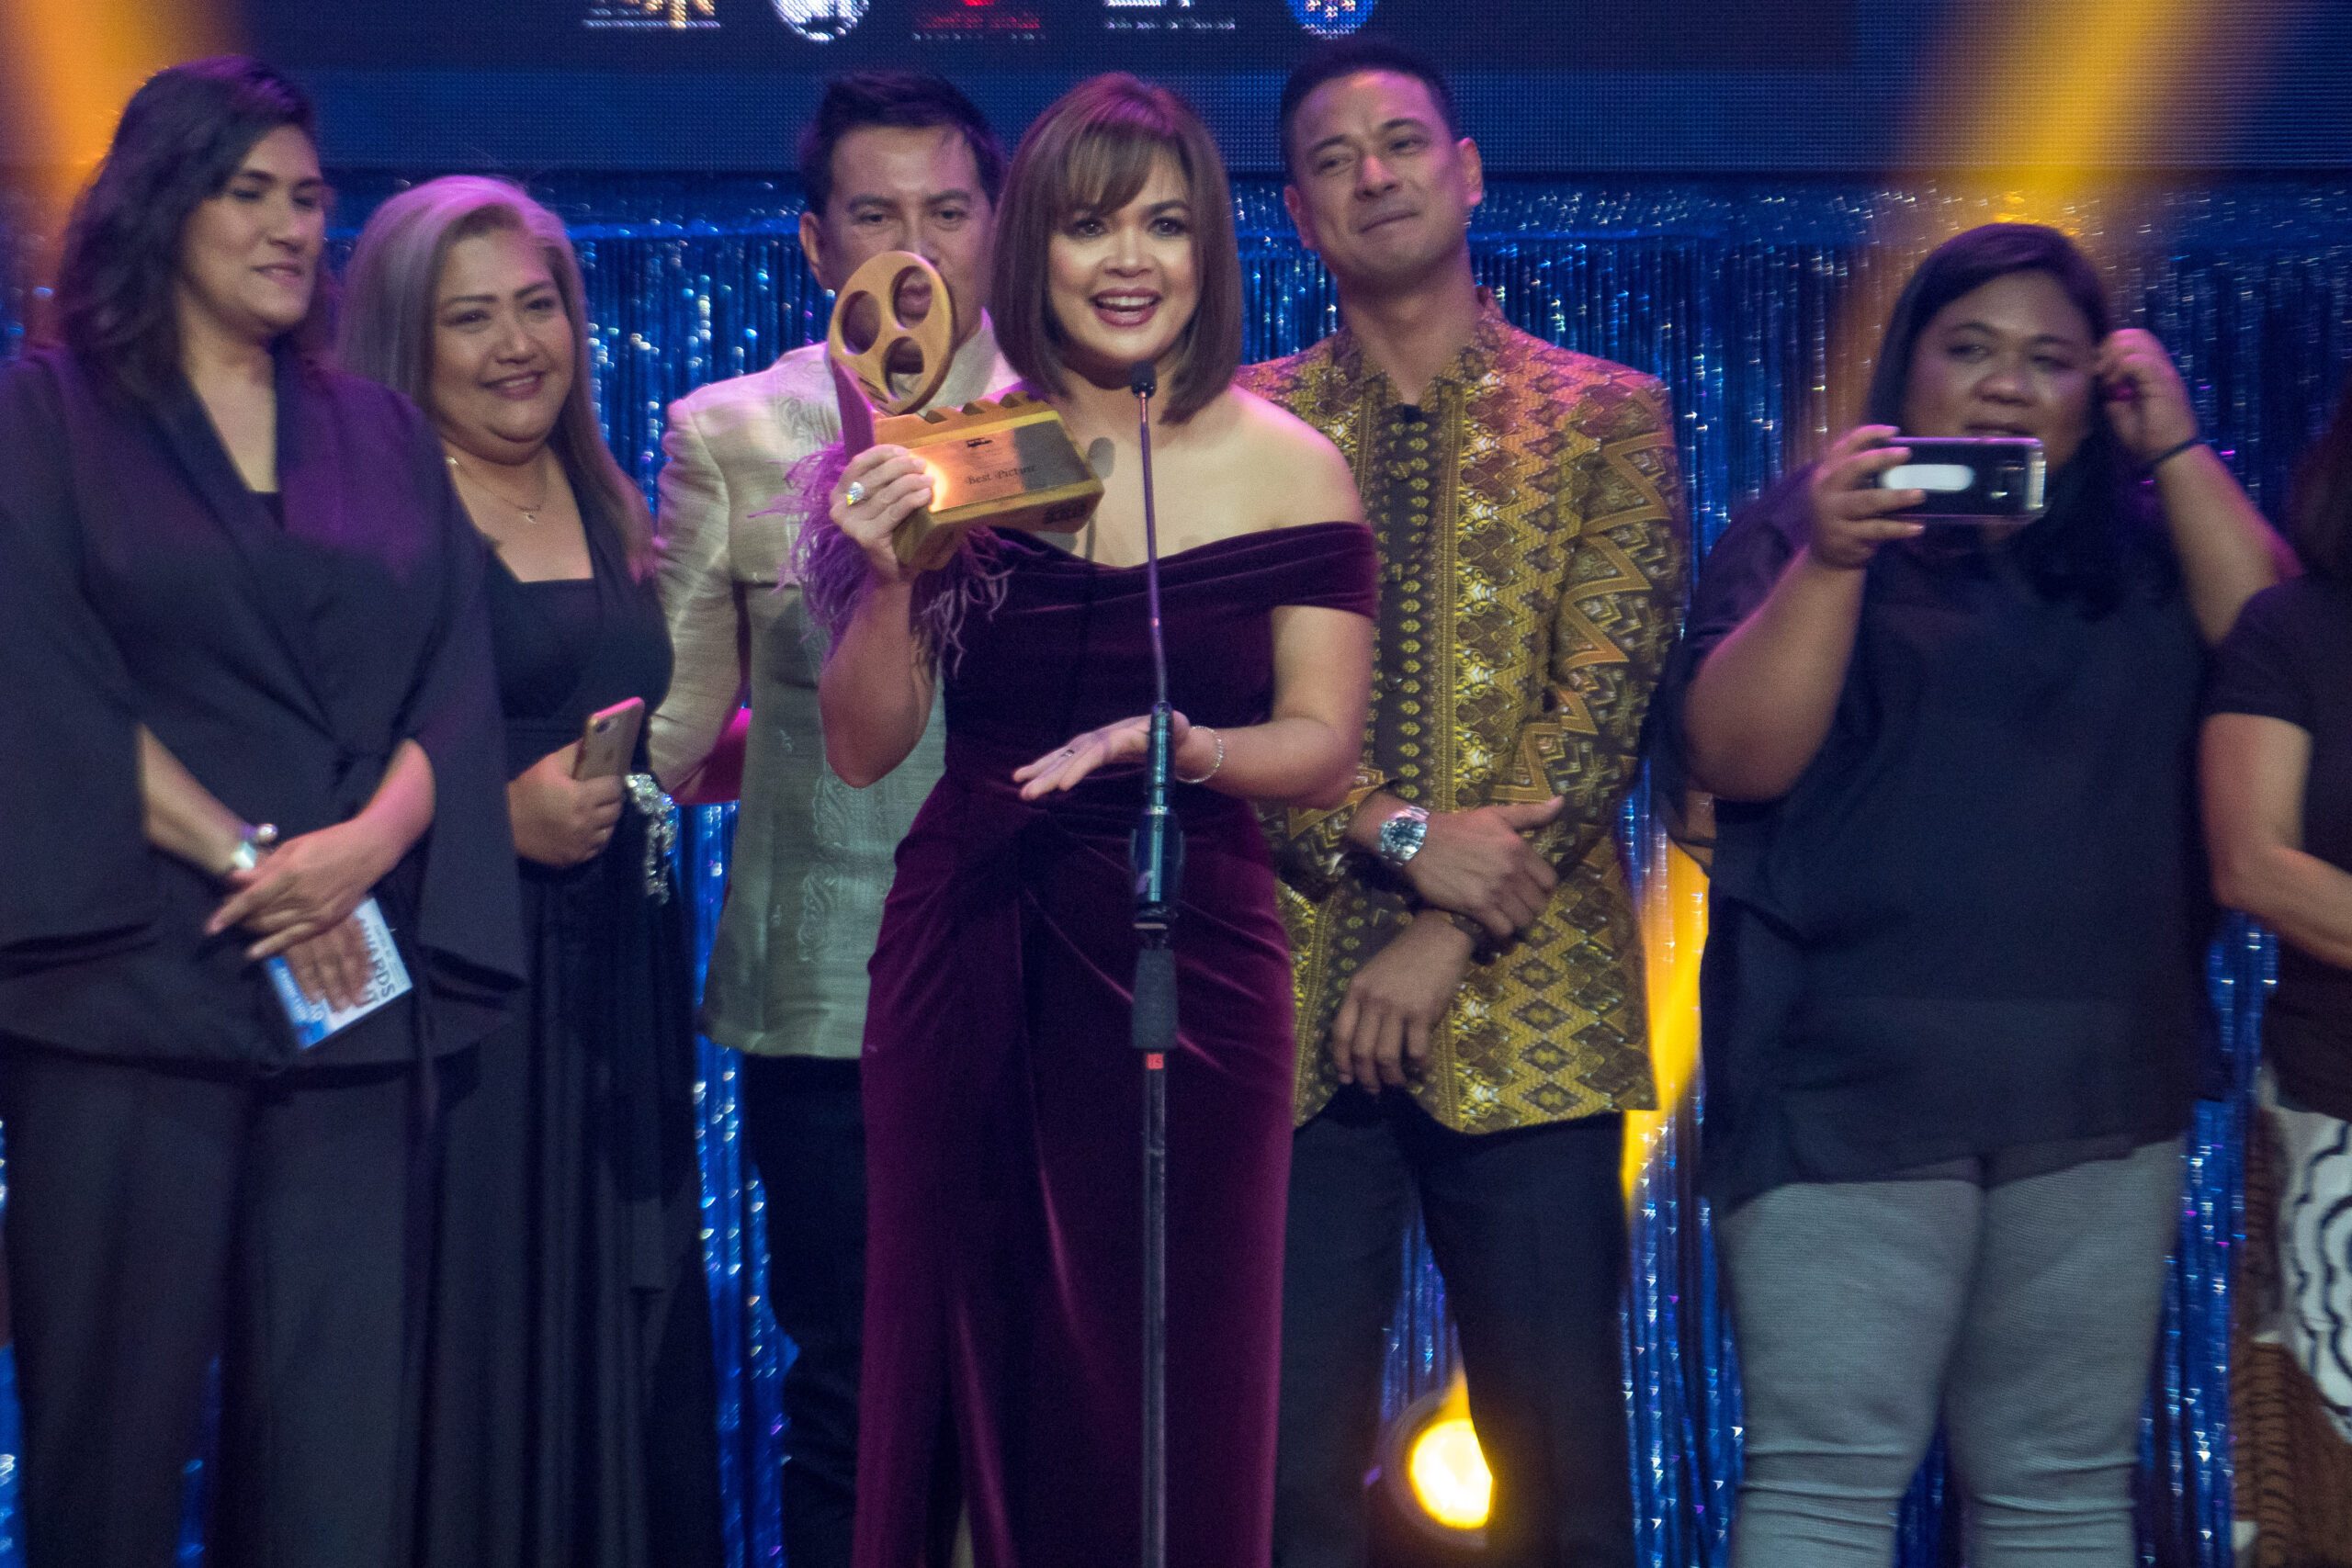 IN PHOTOS: Metro Manila Film Festival 2019 awards night